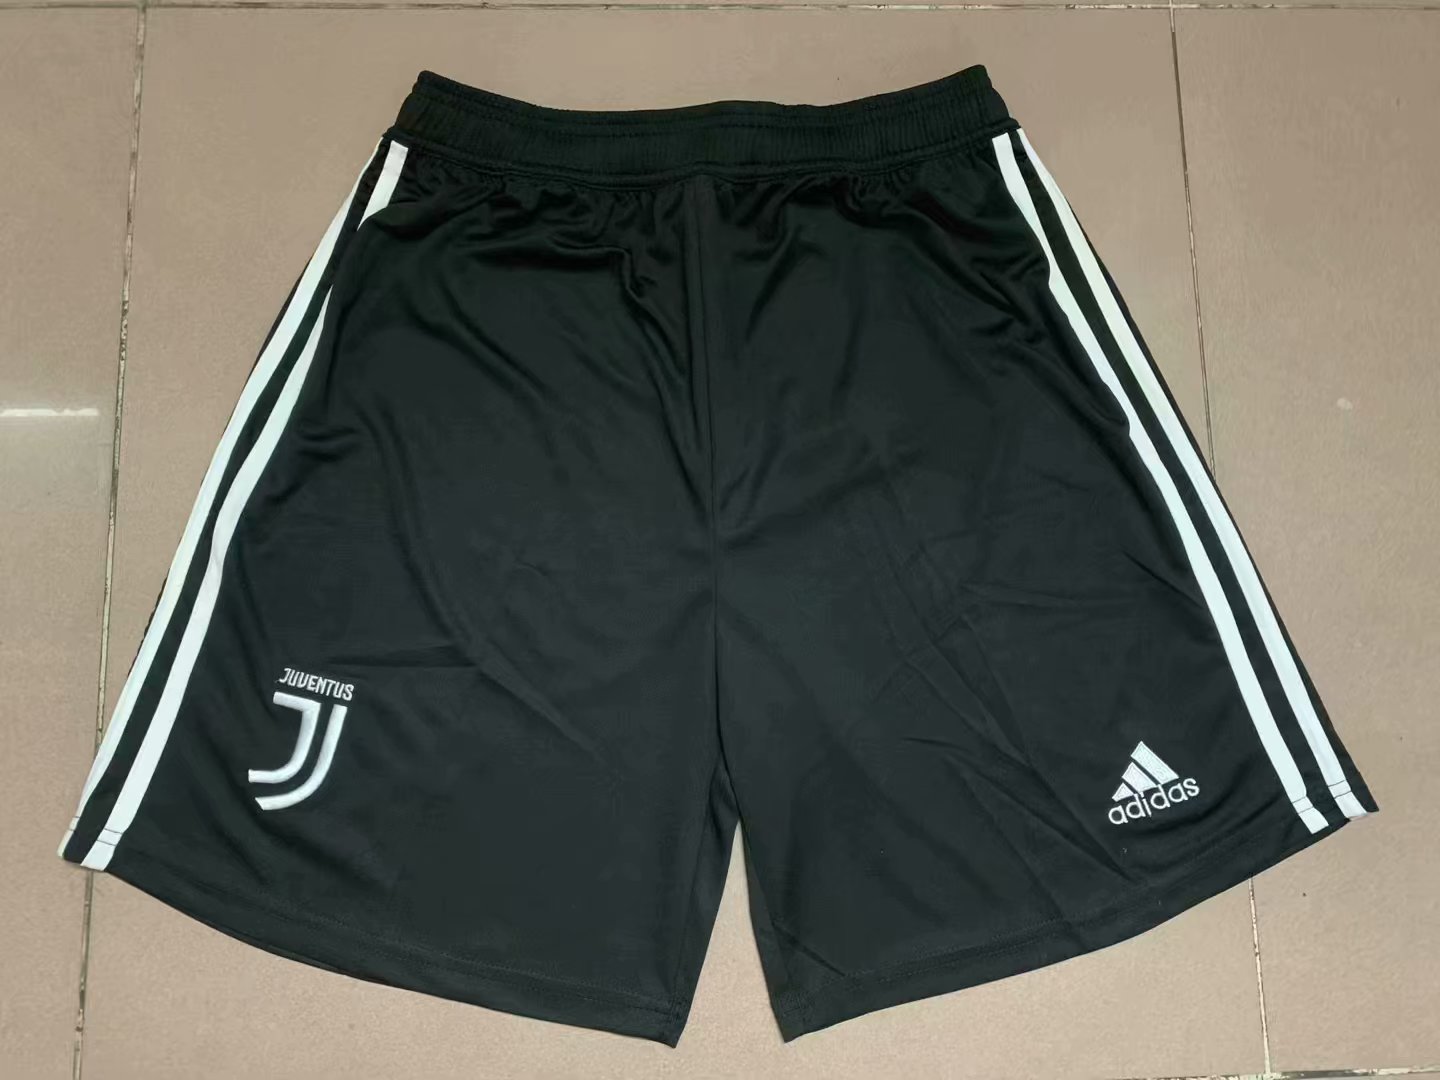 No stock Juventus home short pants